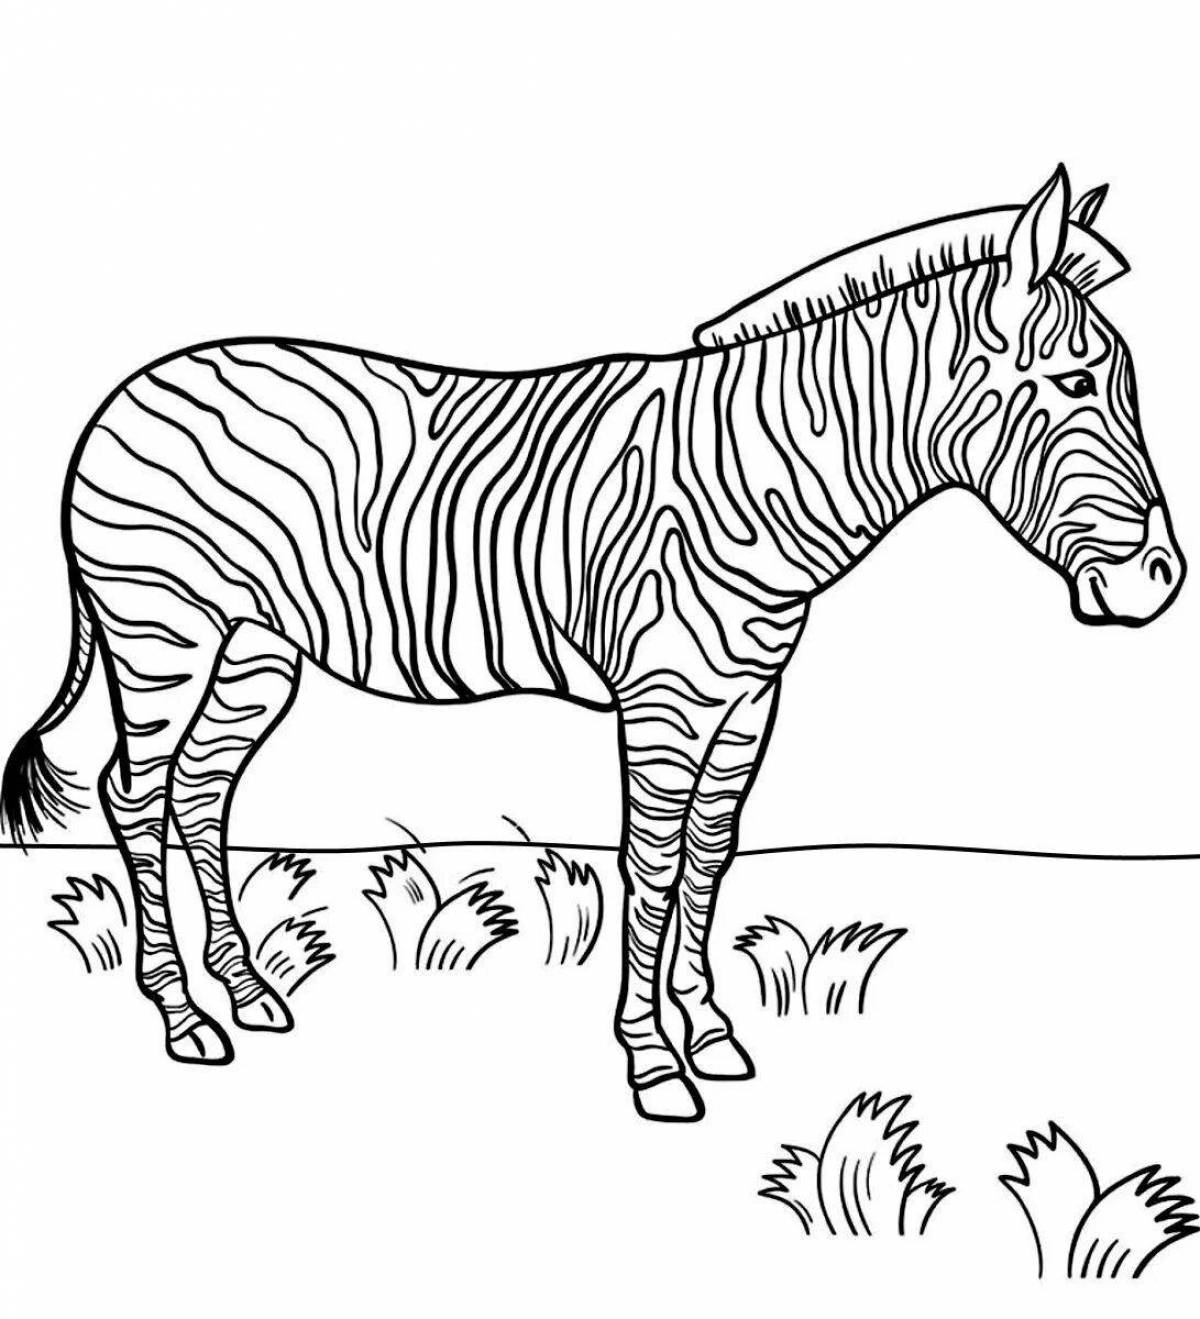 Fun zebra coloring for kids